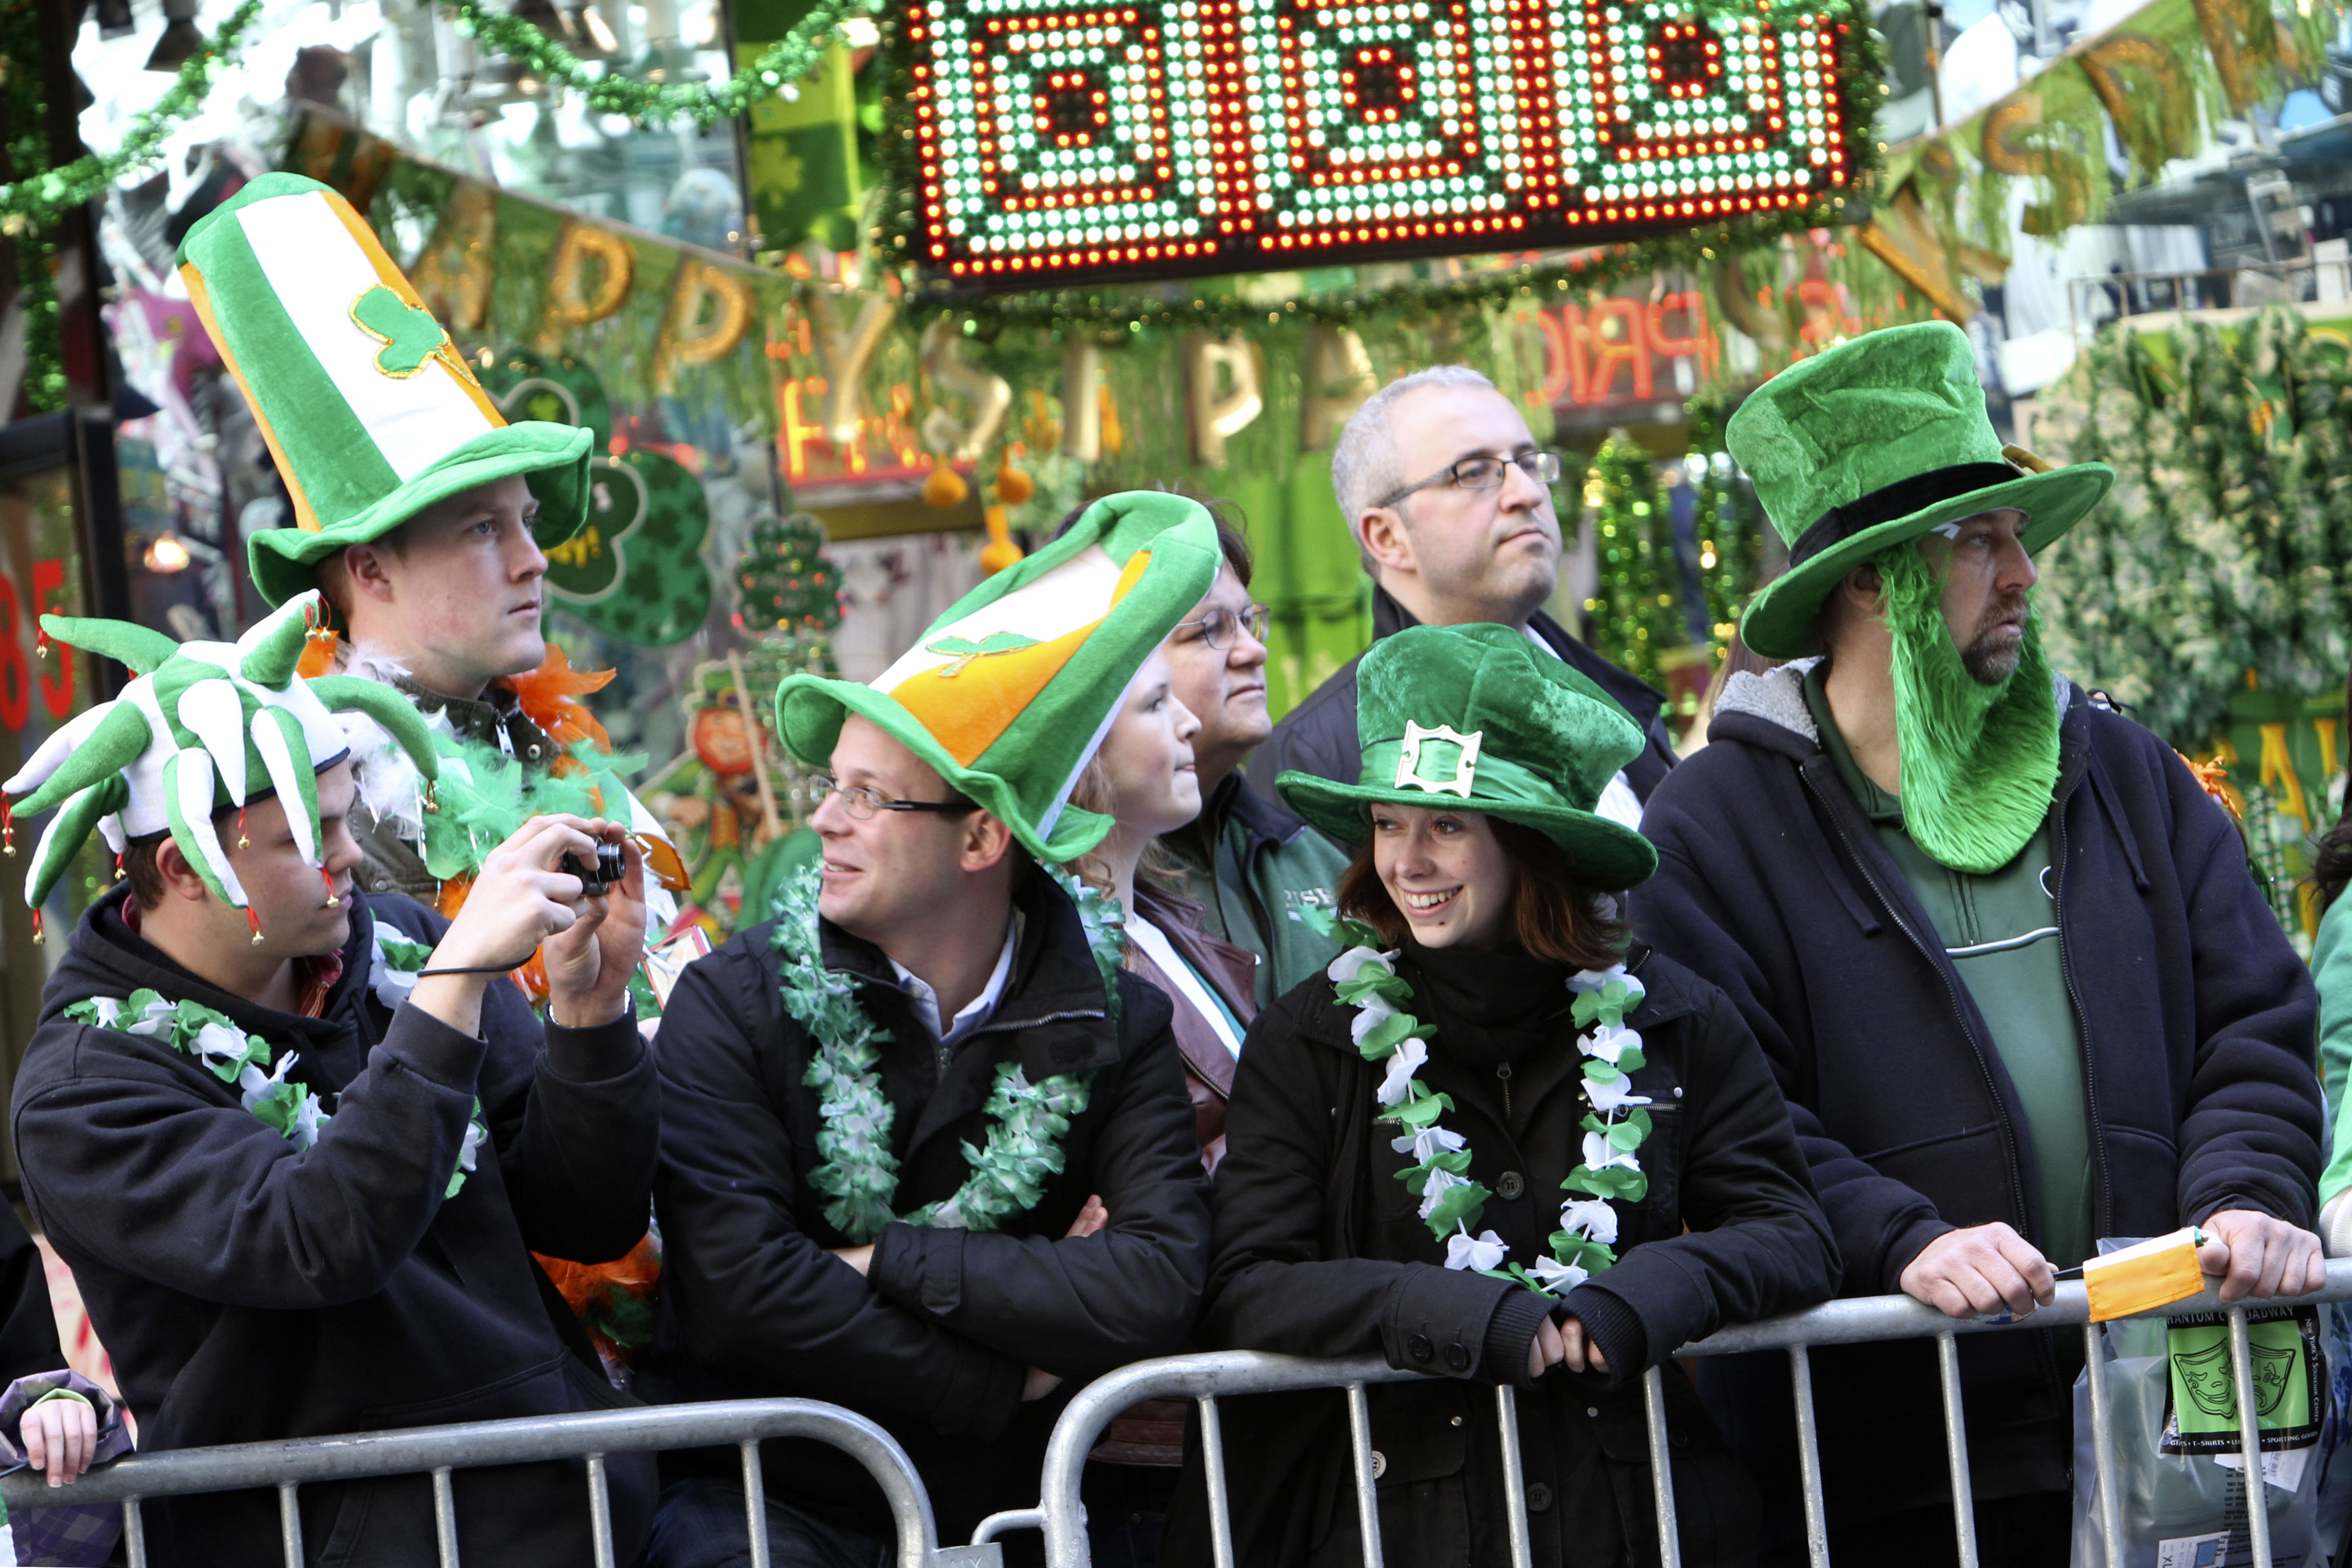 Photos: Chicago's St. Patrick's Day celebration